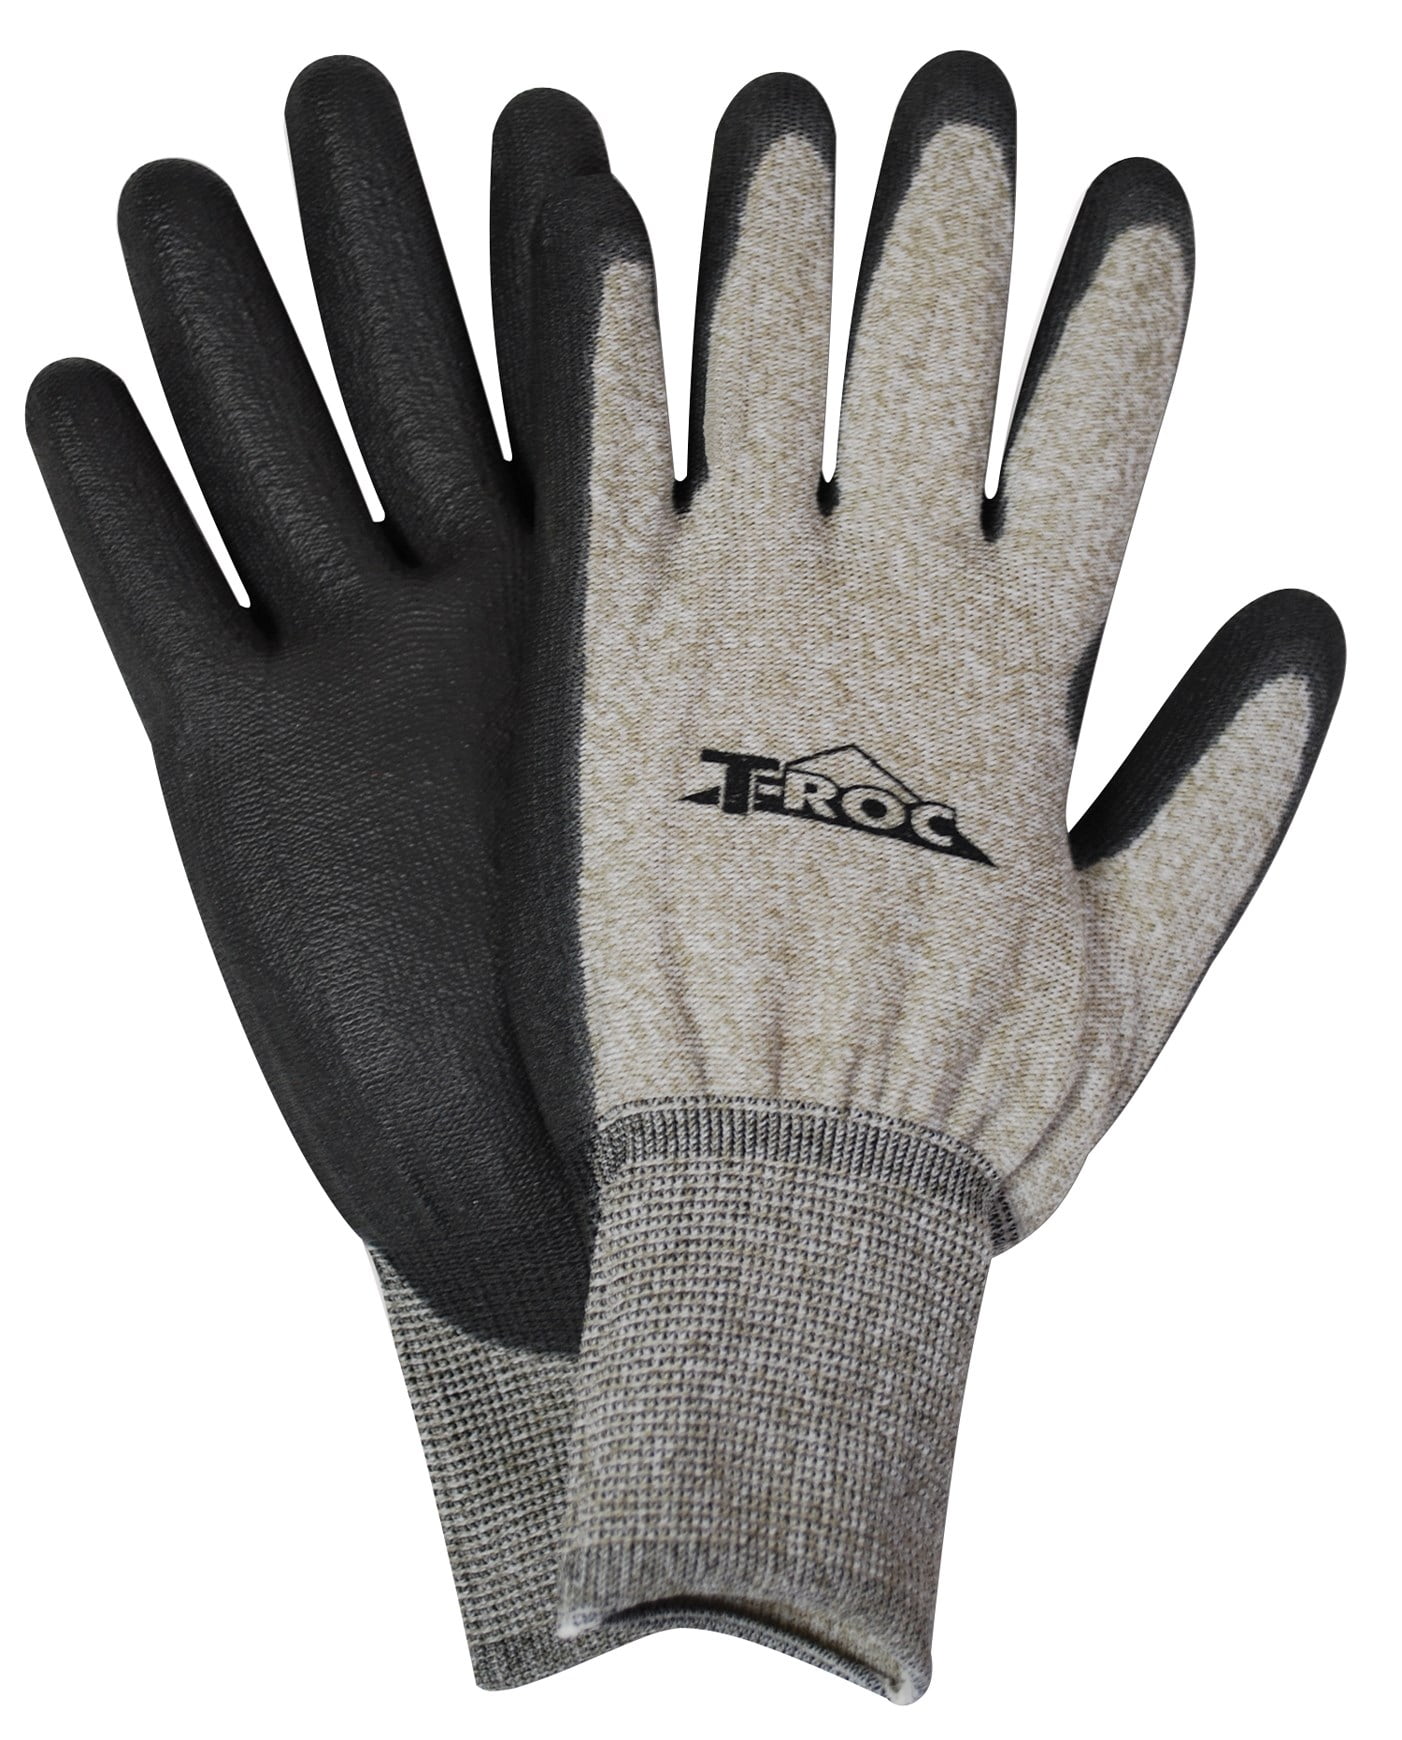 Magid Glove ROC5000TM Medium Roc Touchscreen Gloves - Walmart.com